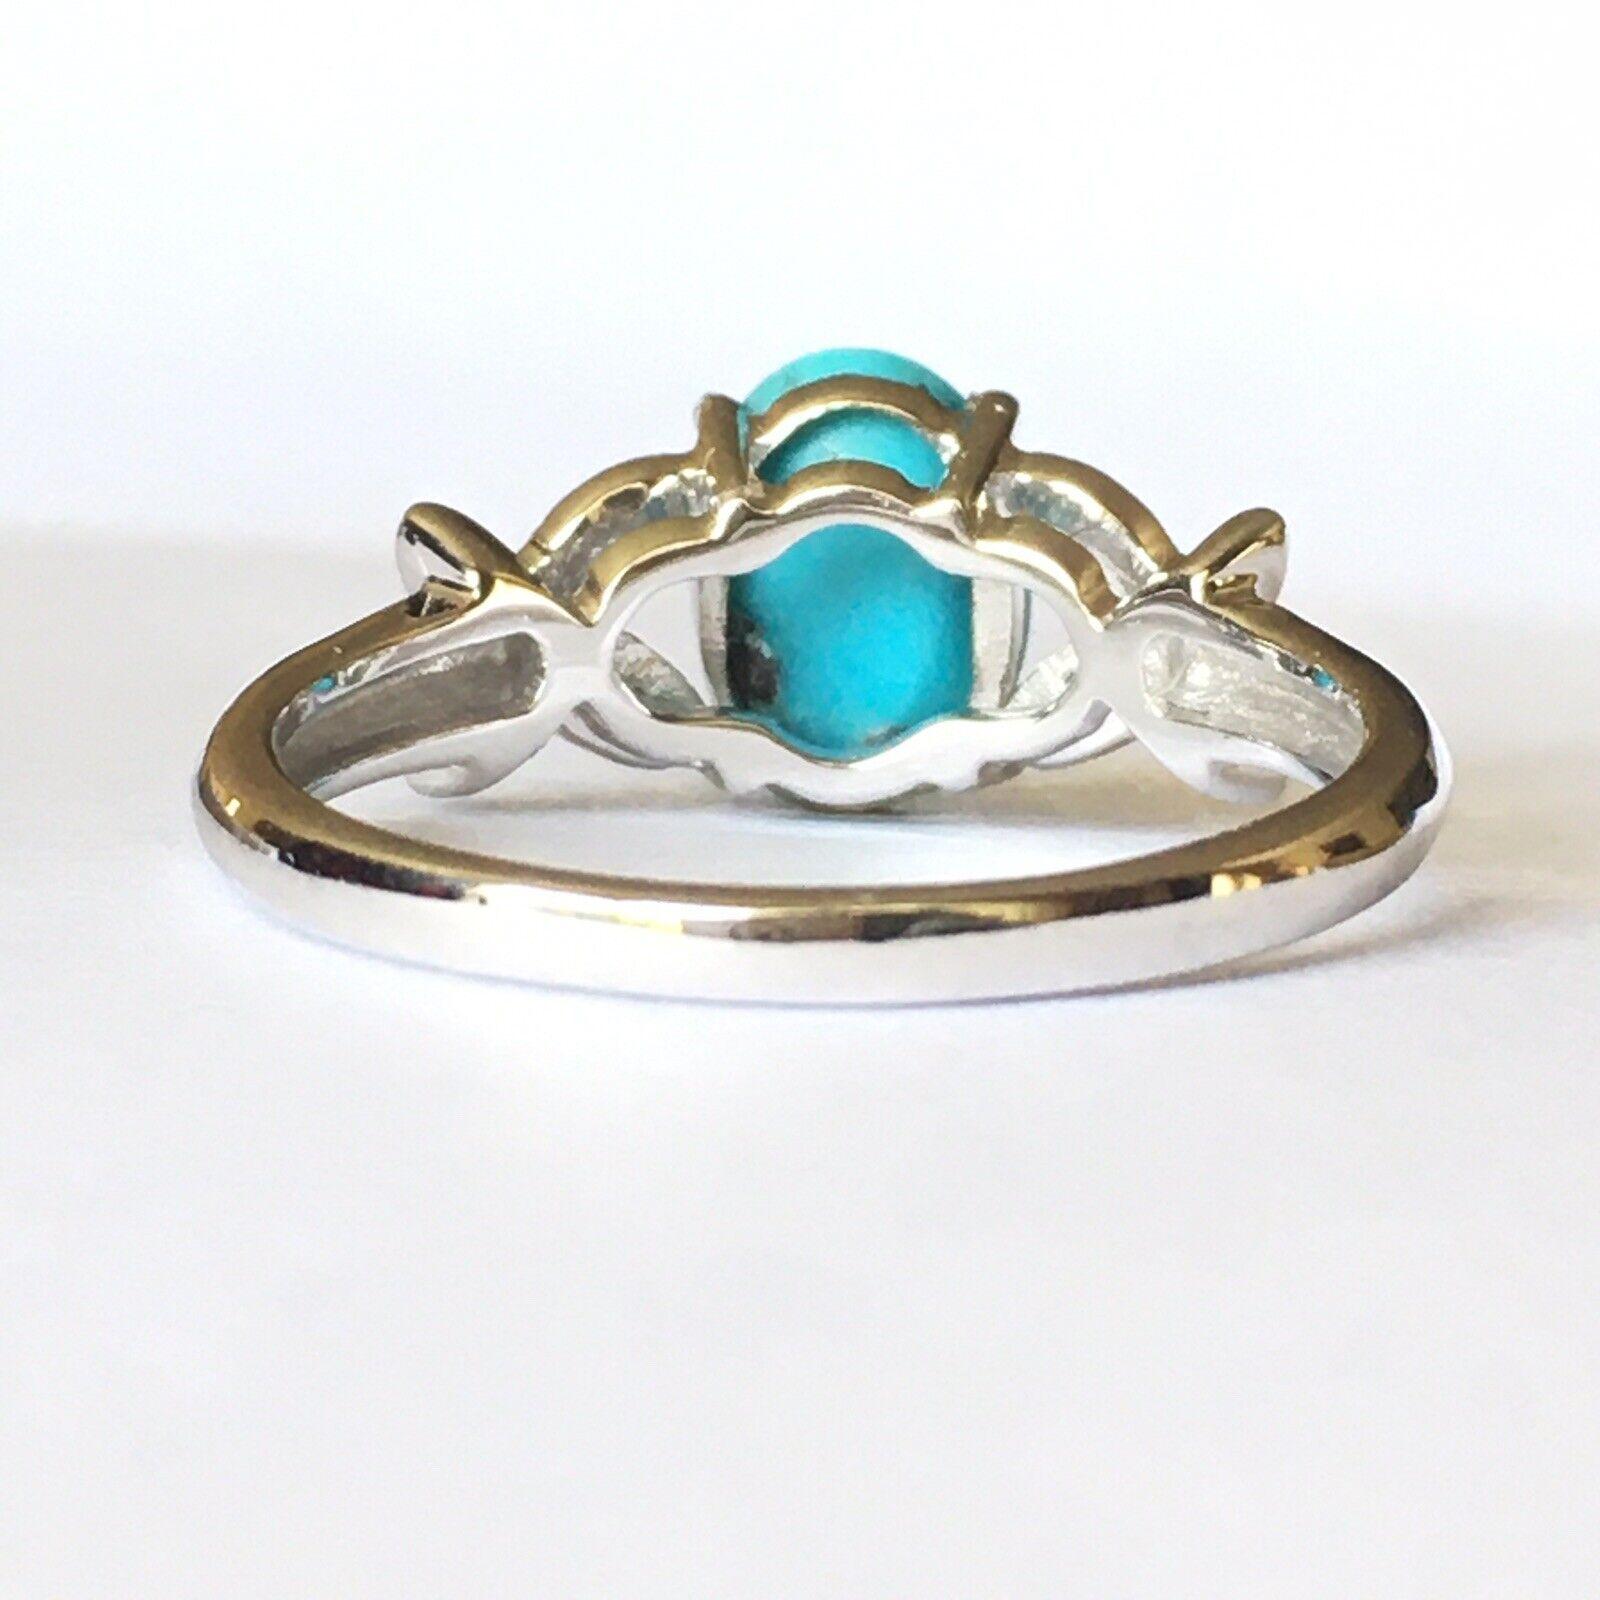 14 Karat White Gold Hallmarked Lady's Diamond Persian Turquoise Ring 1970s Size For Sale 1